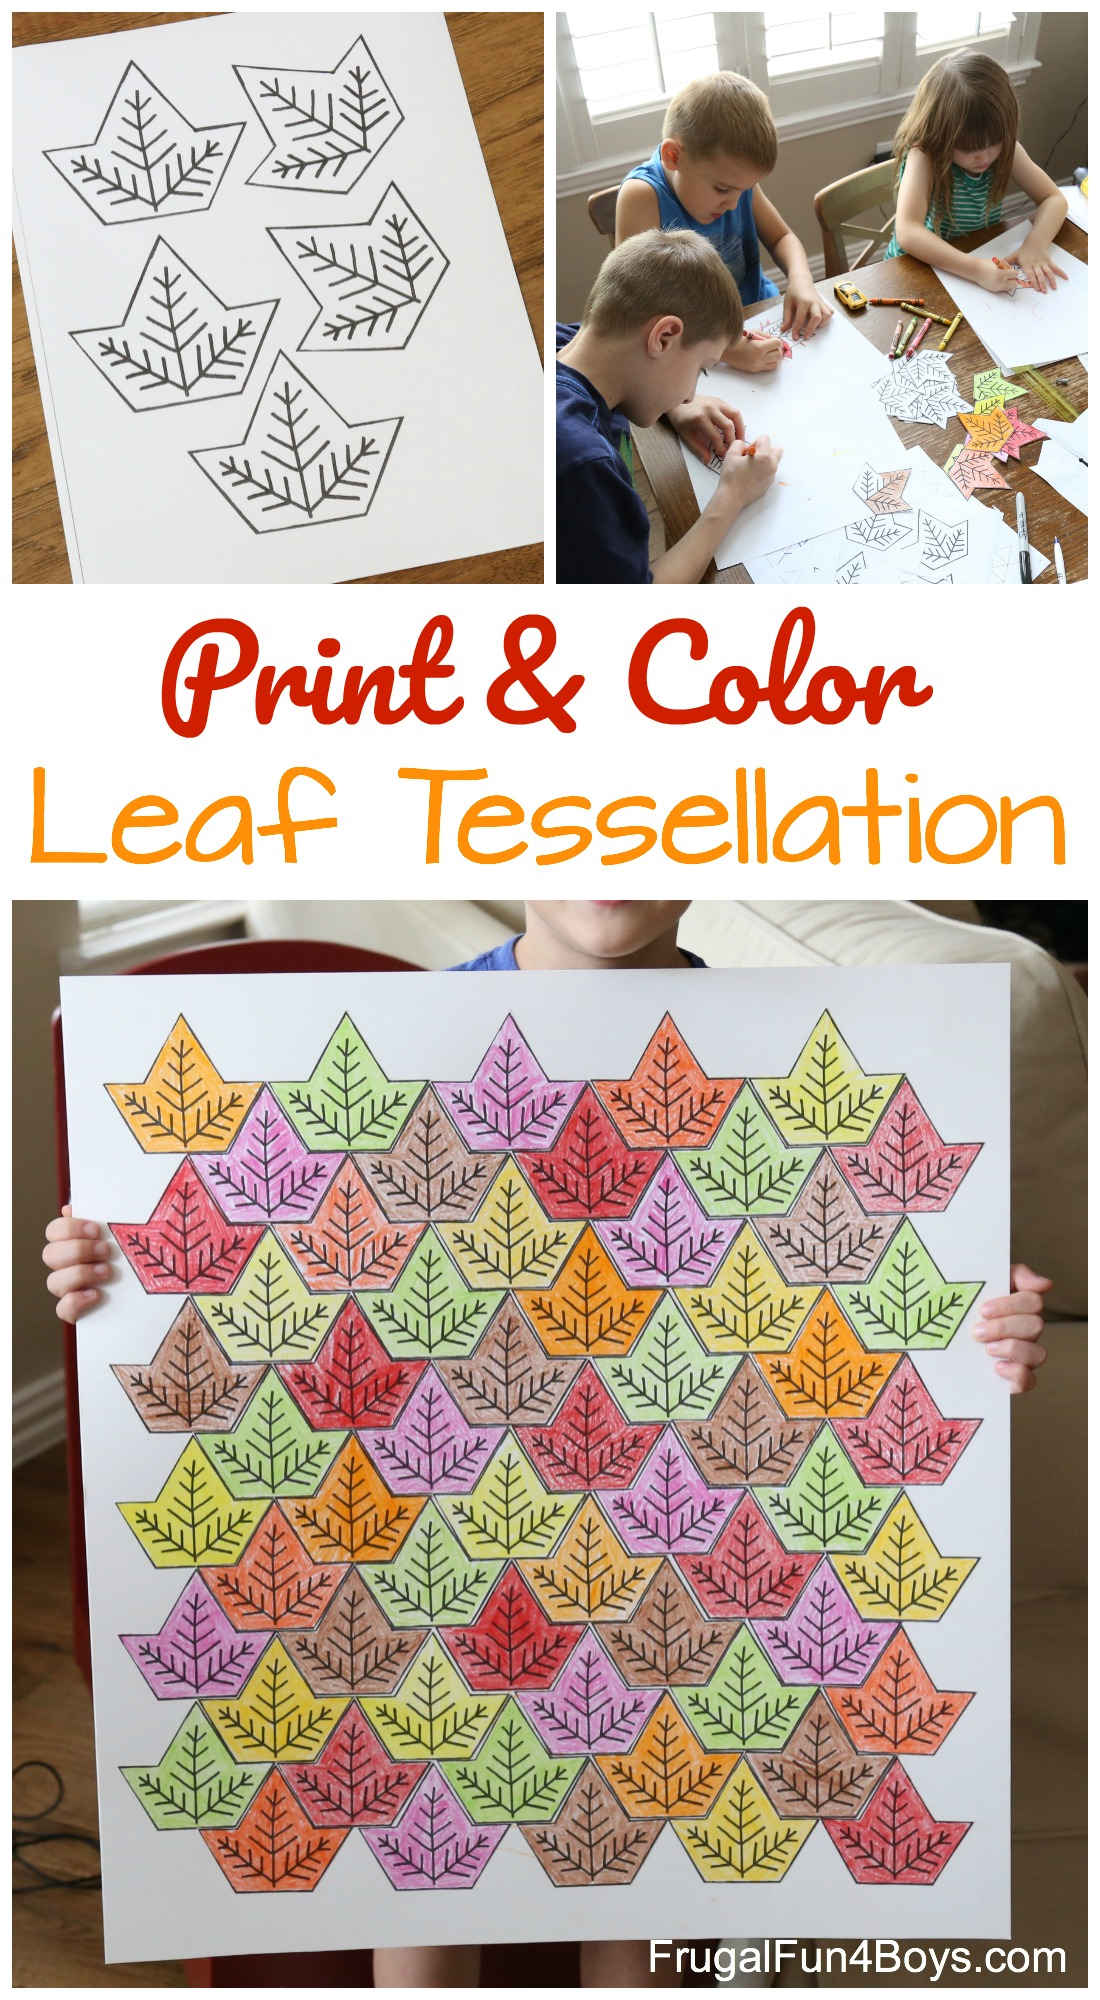 Leaf Tessellation Collaborative Stem Art Project - Frugal